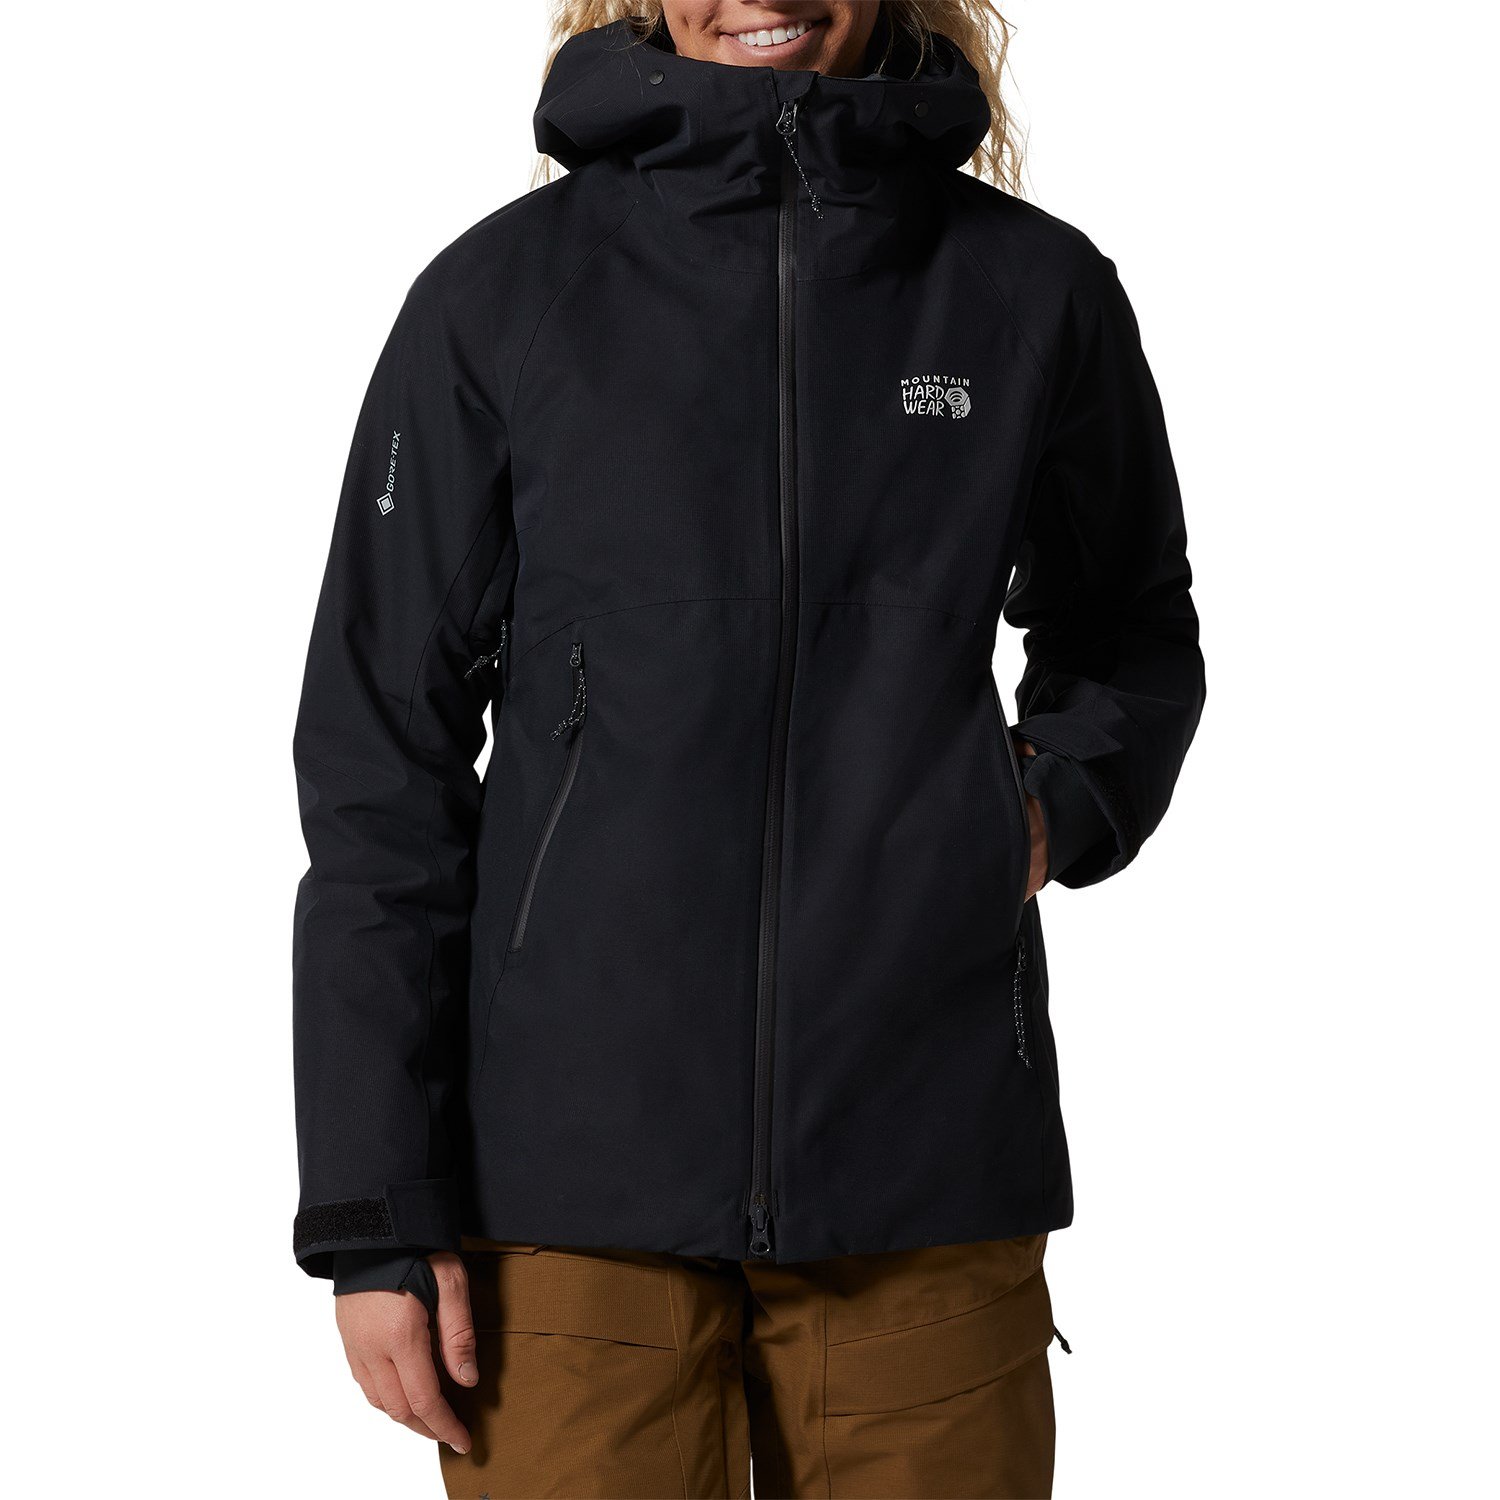 Куртка Mountain Hardwear Cloud Bank Gore-TEX LT утепленная, черный куртка утепленная zara packaway черный